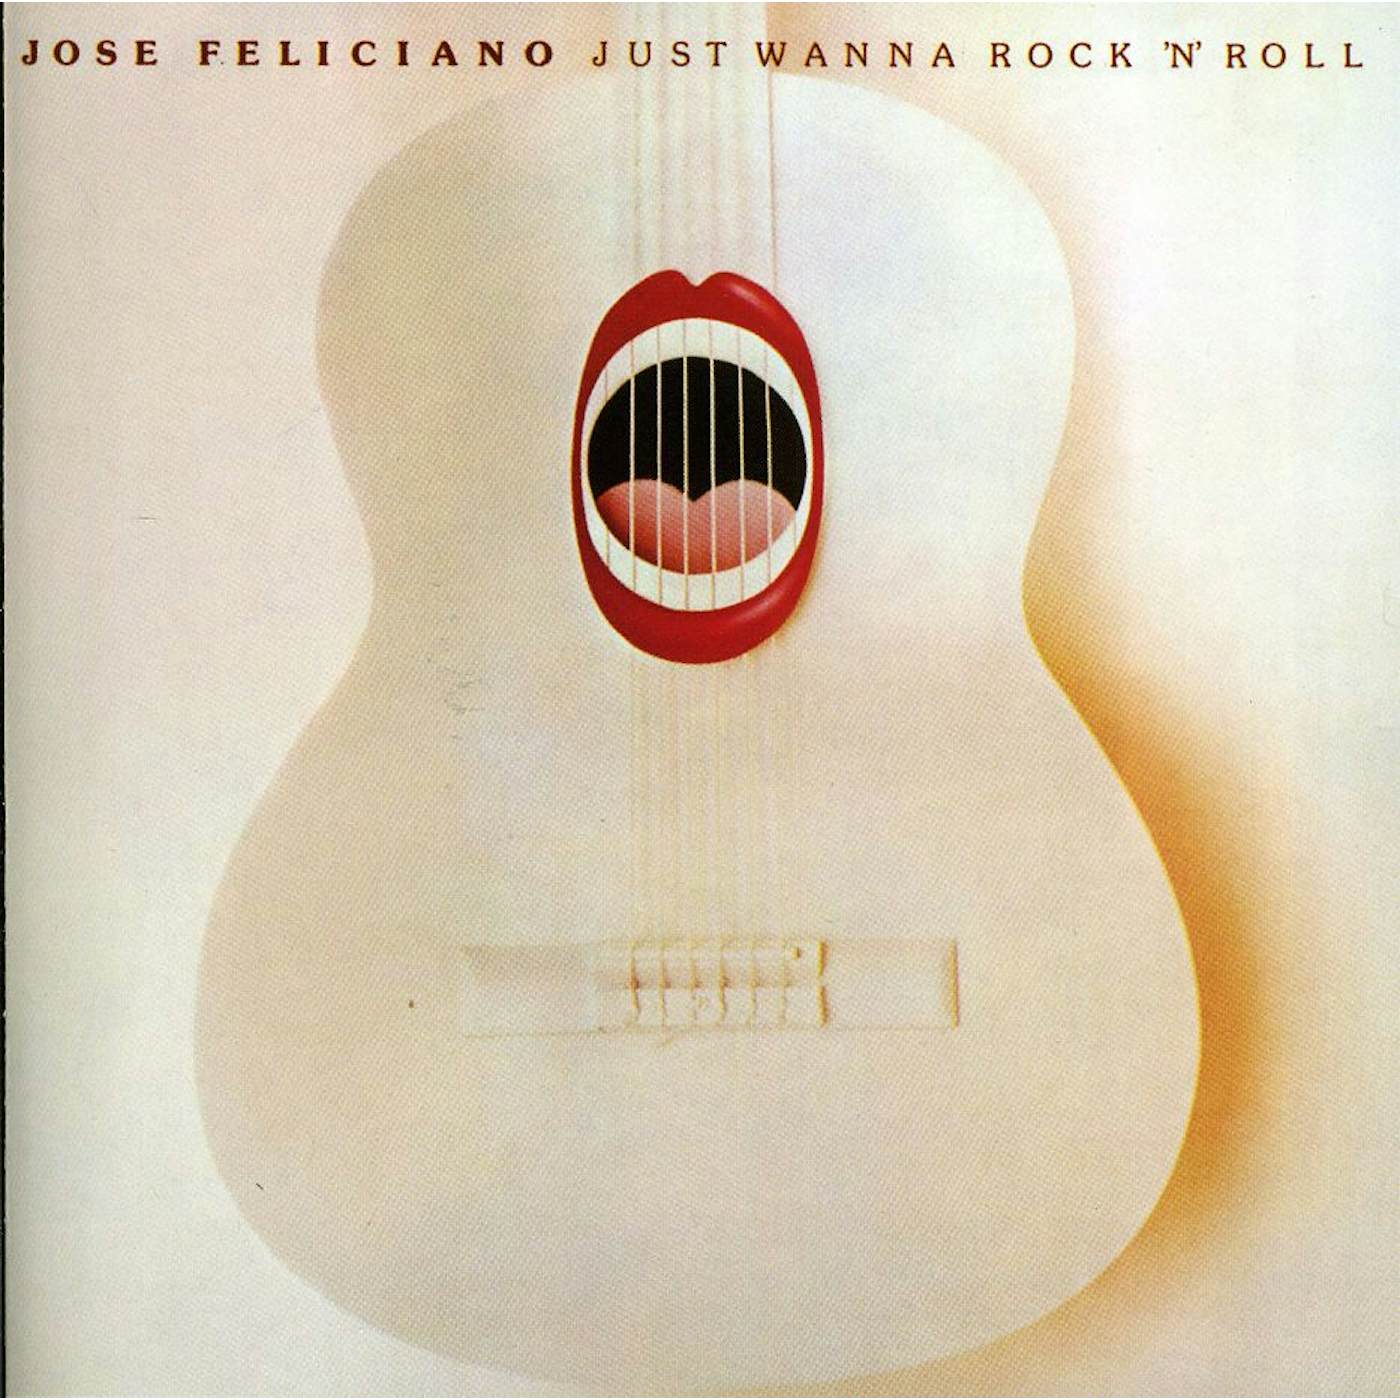 José Feliciano JUST WANNA ROCK N ROLL CD